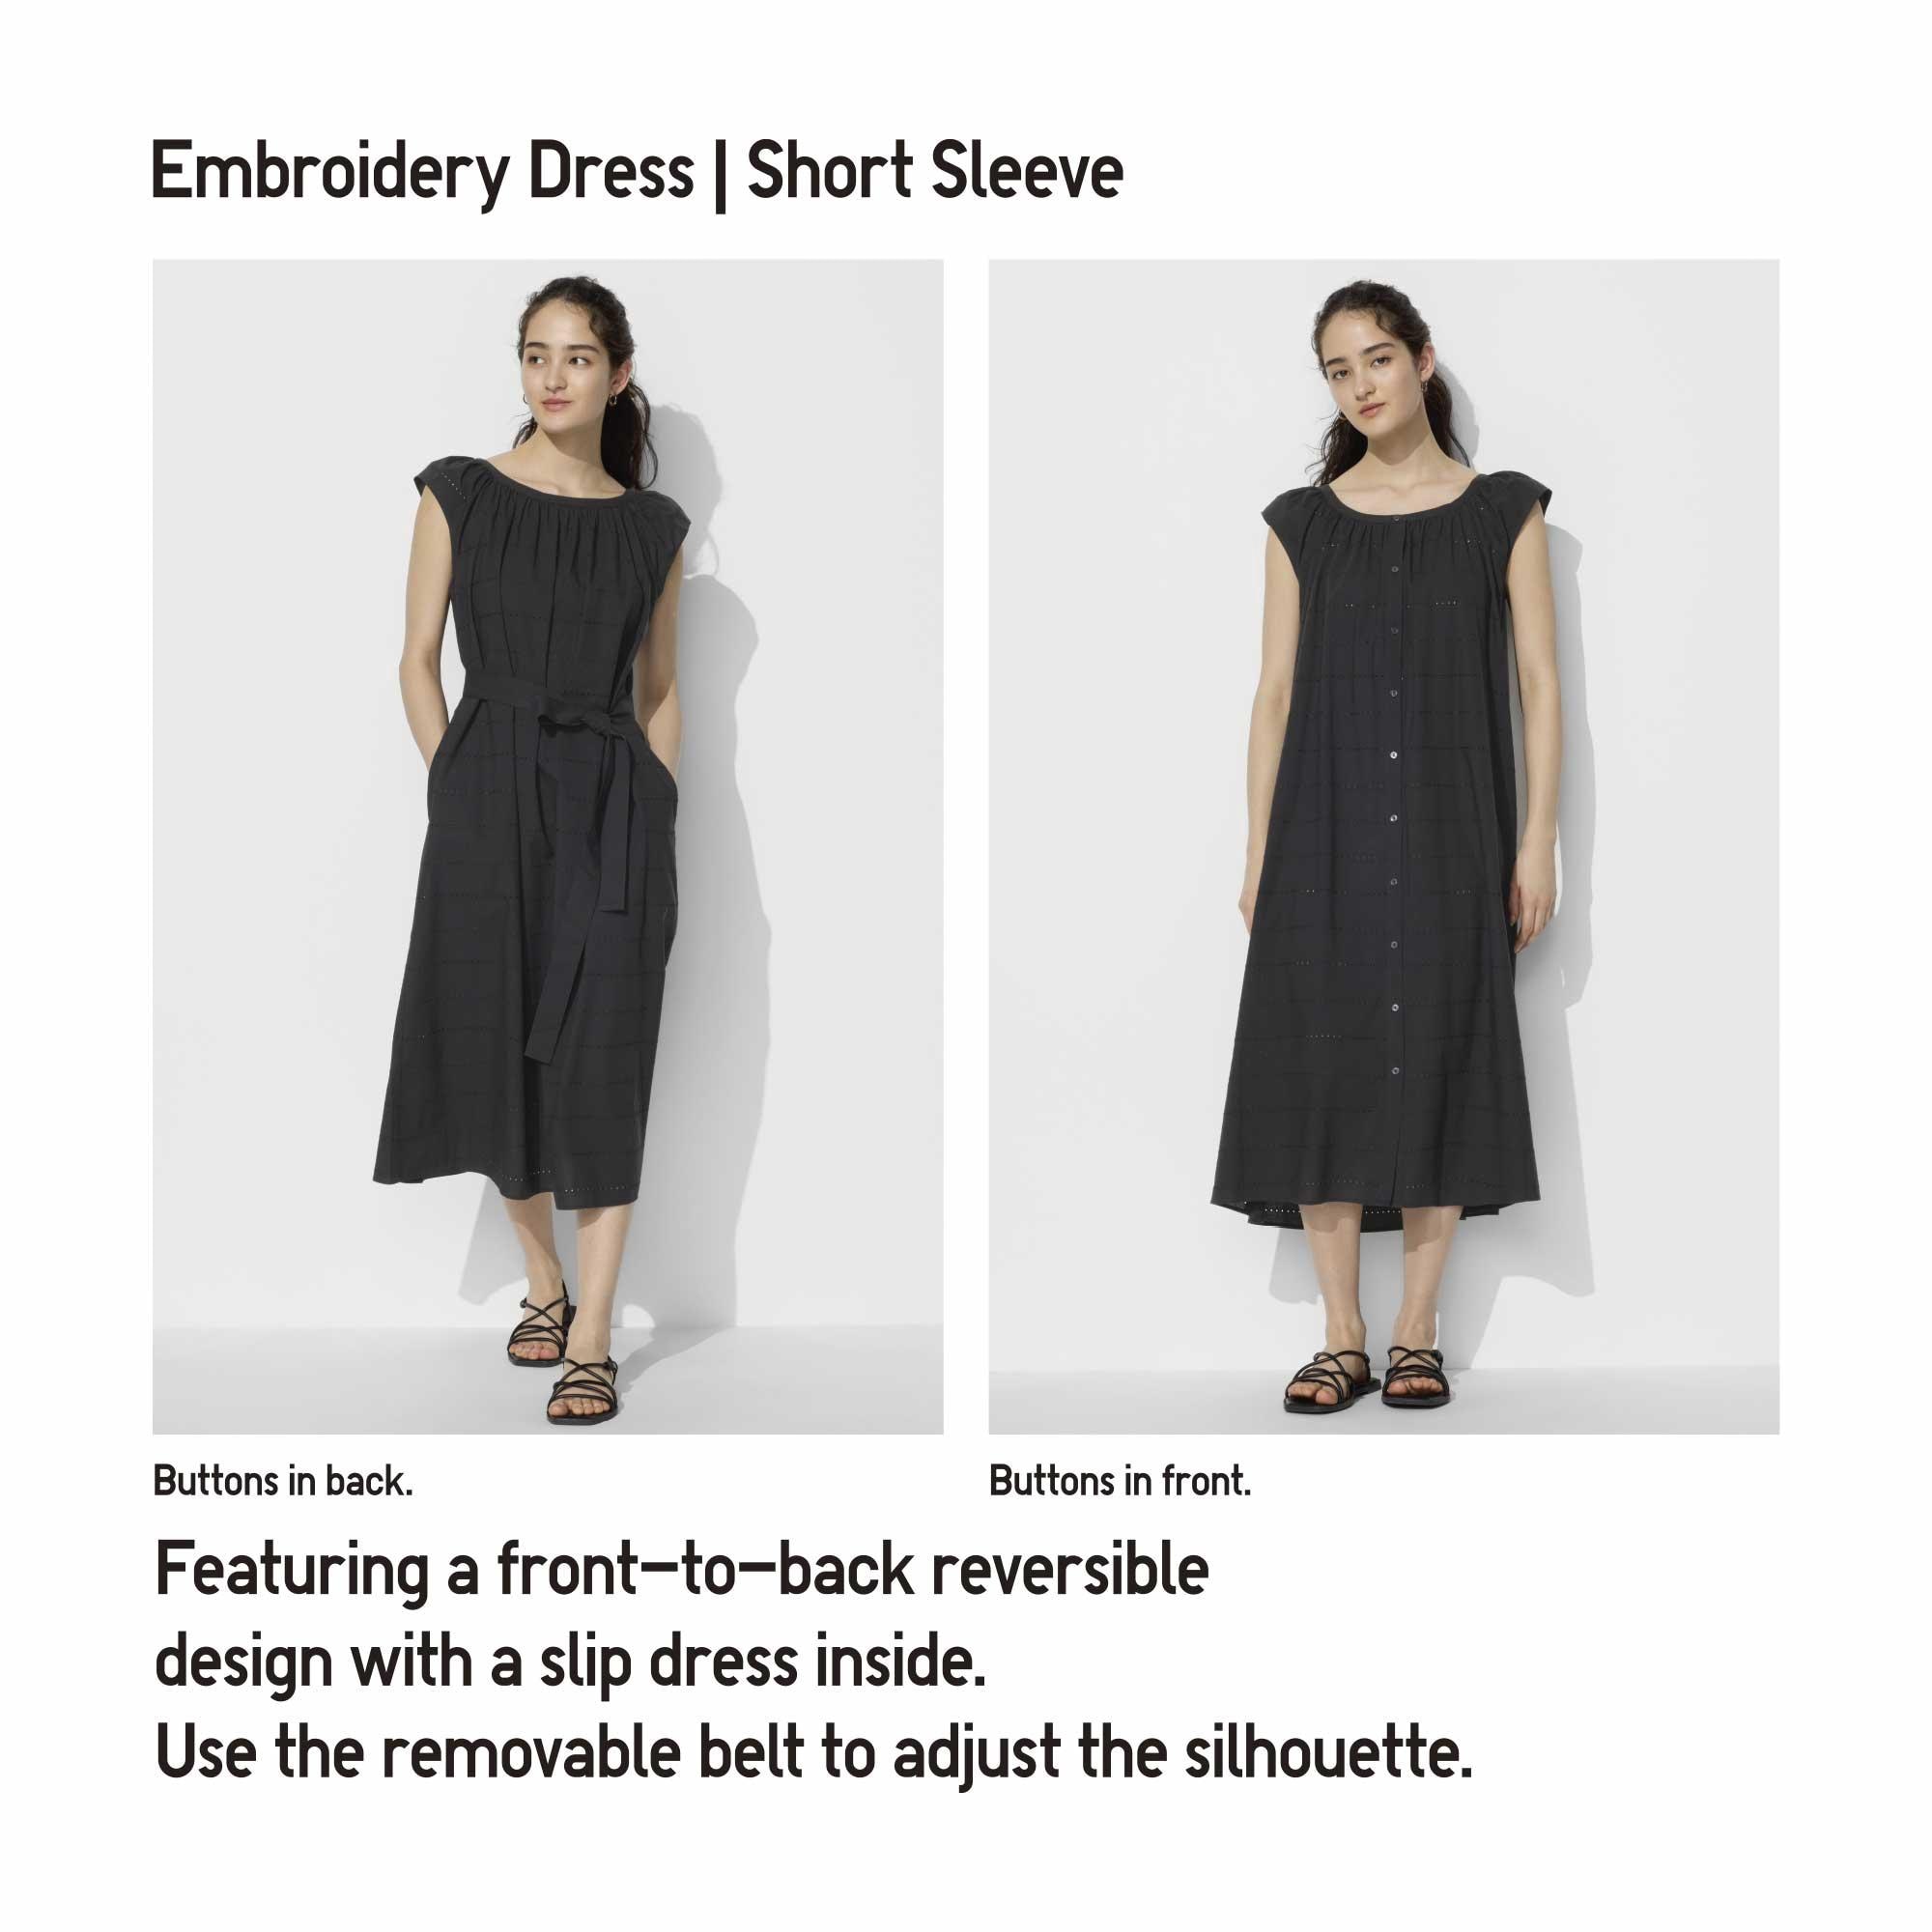 EMBROIDERY DRESS /SHORT SLEEVE